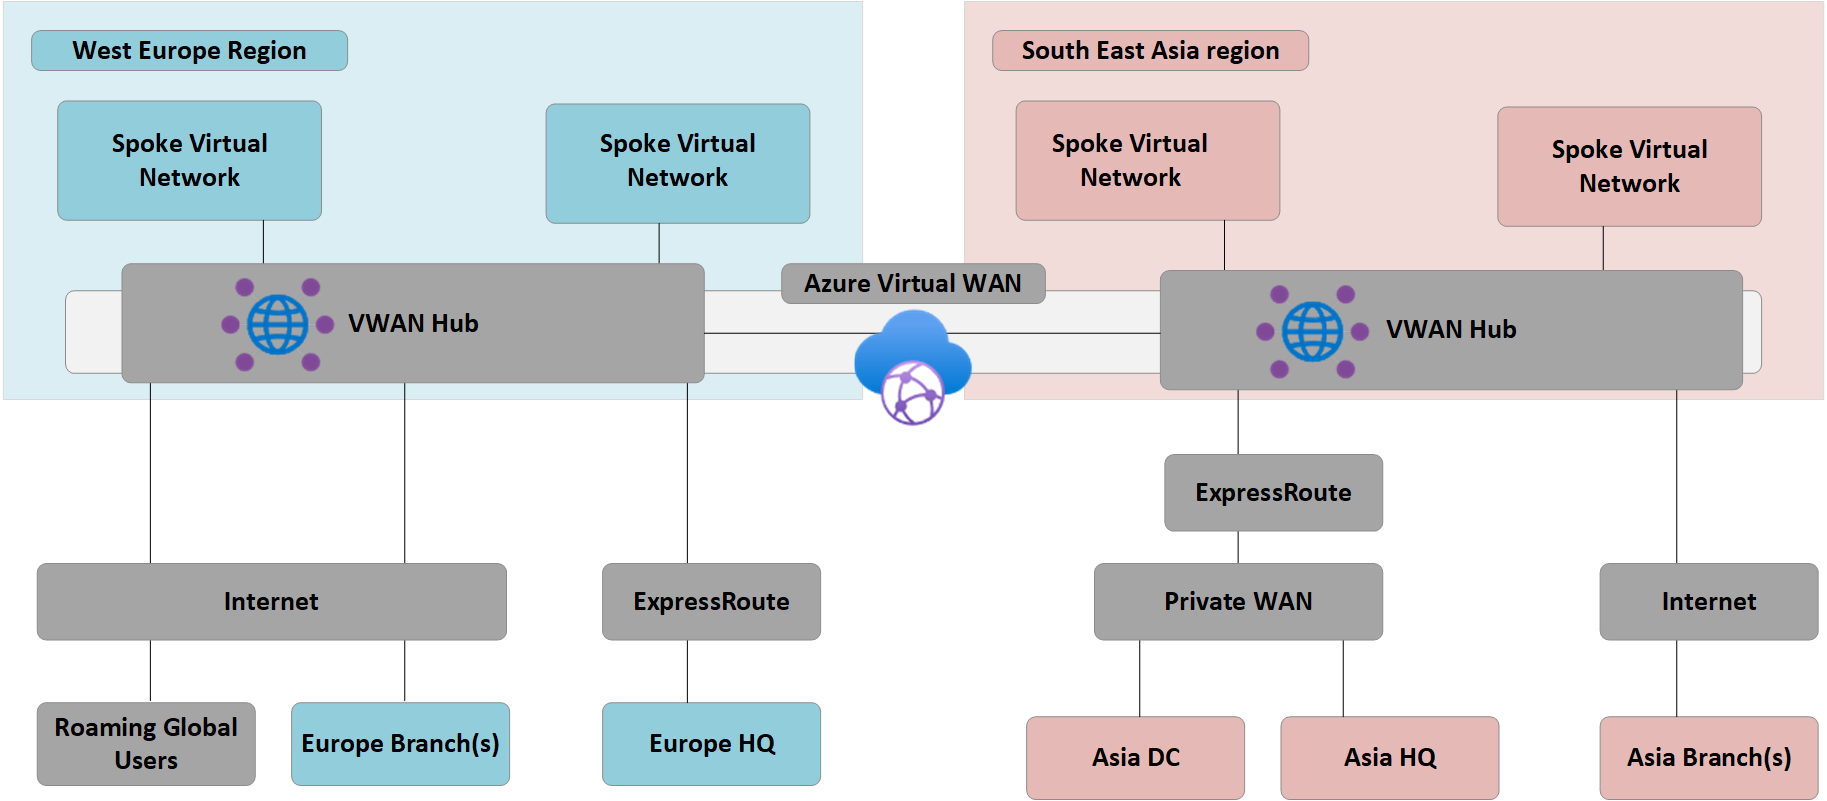 da arquitetura da WAN virtual da Contoso